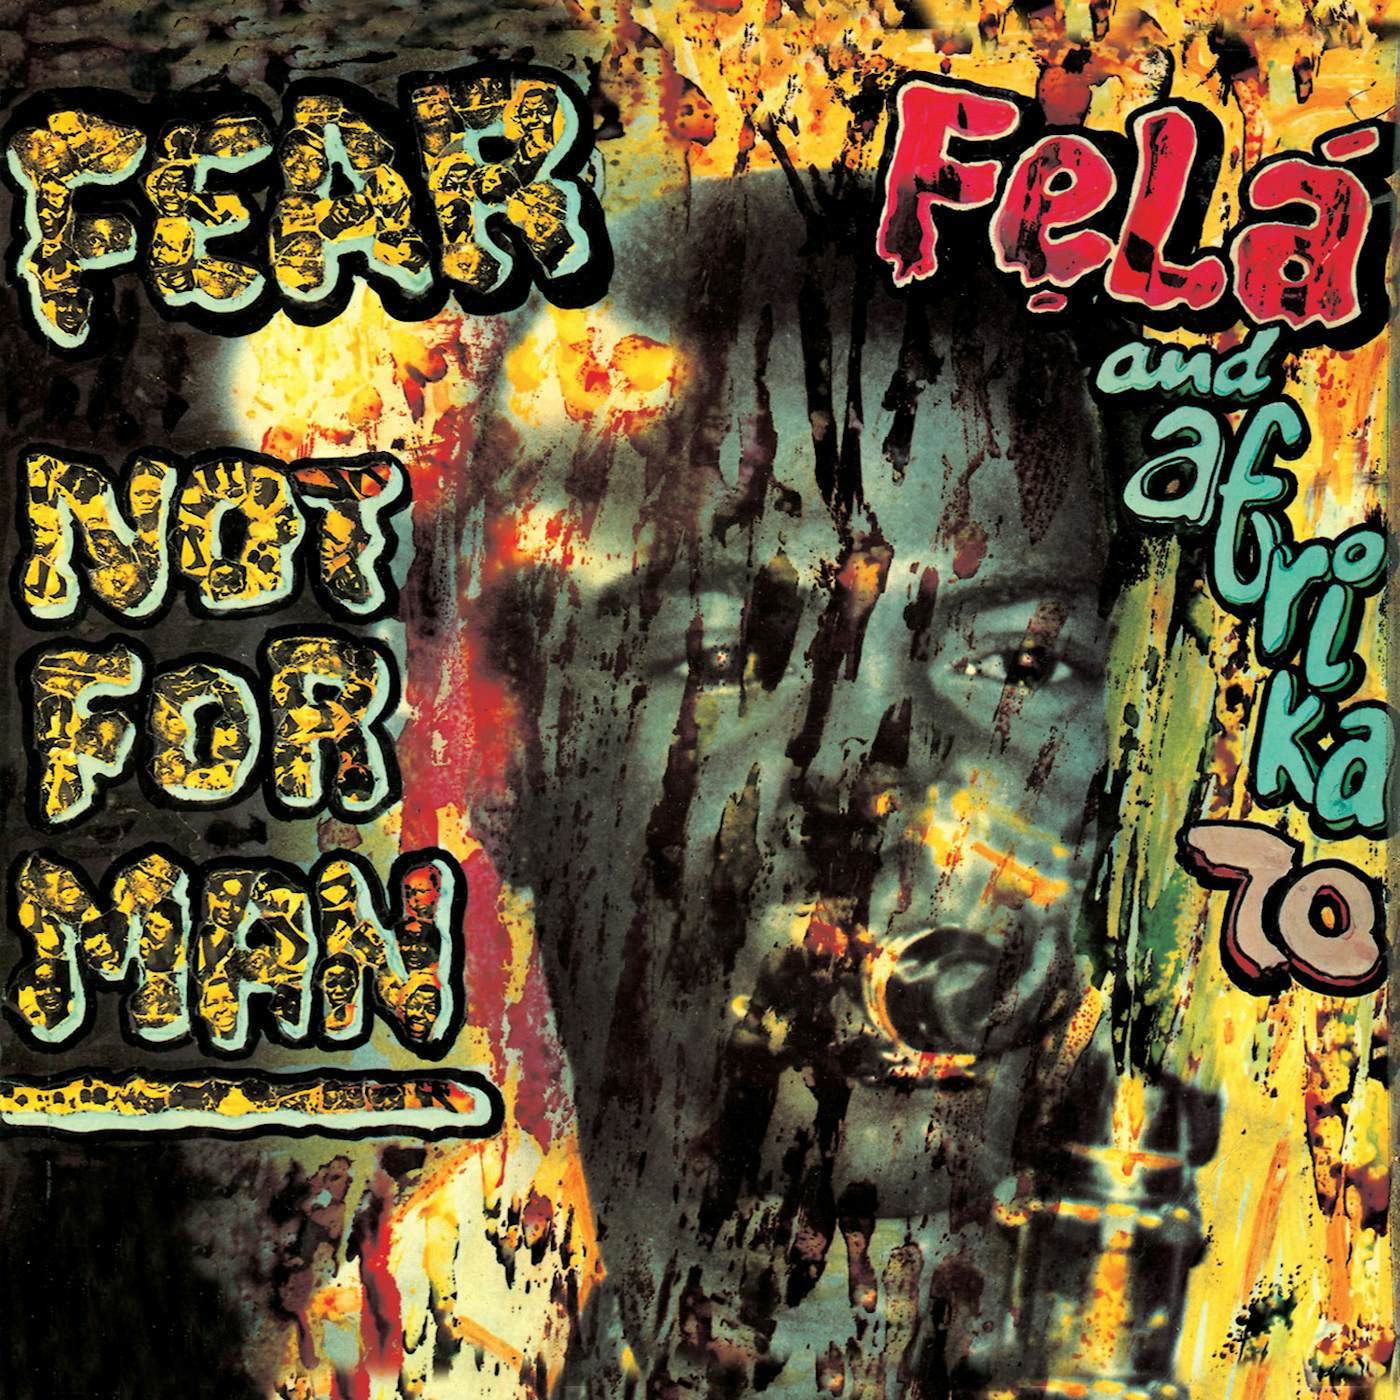 Fela Kuti Fear Not For Man Vinyl Record